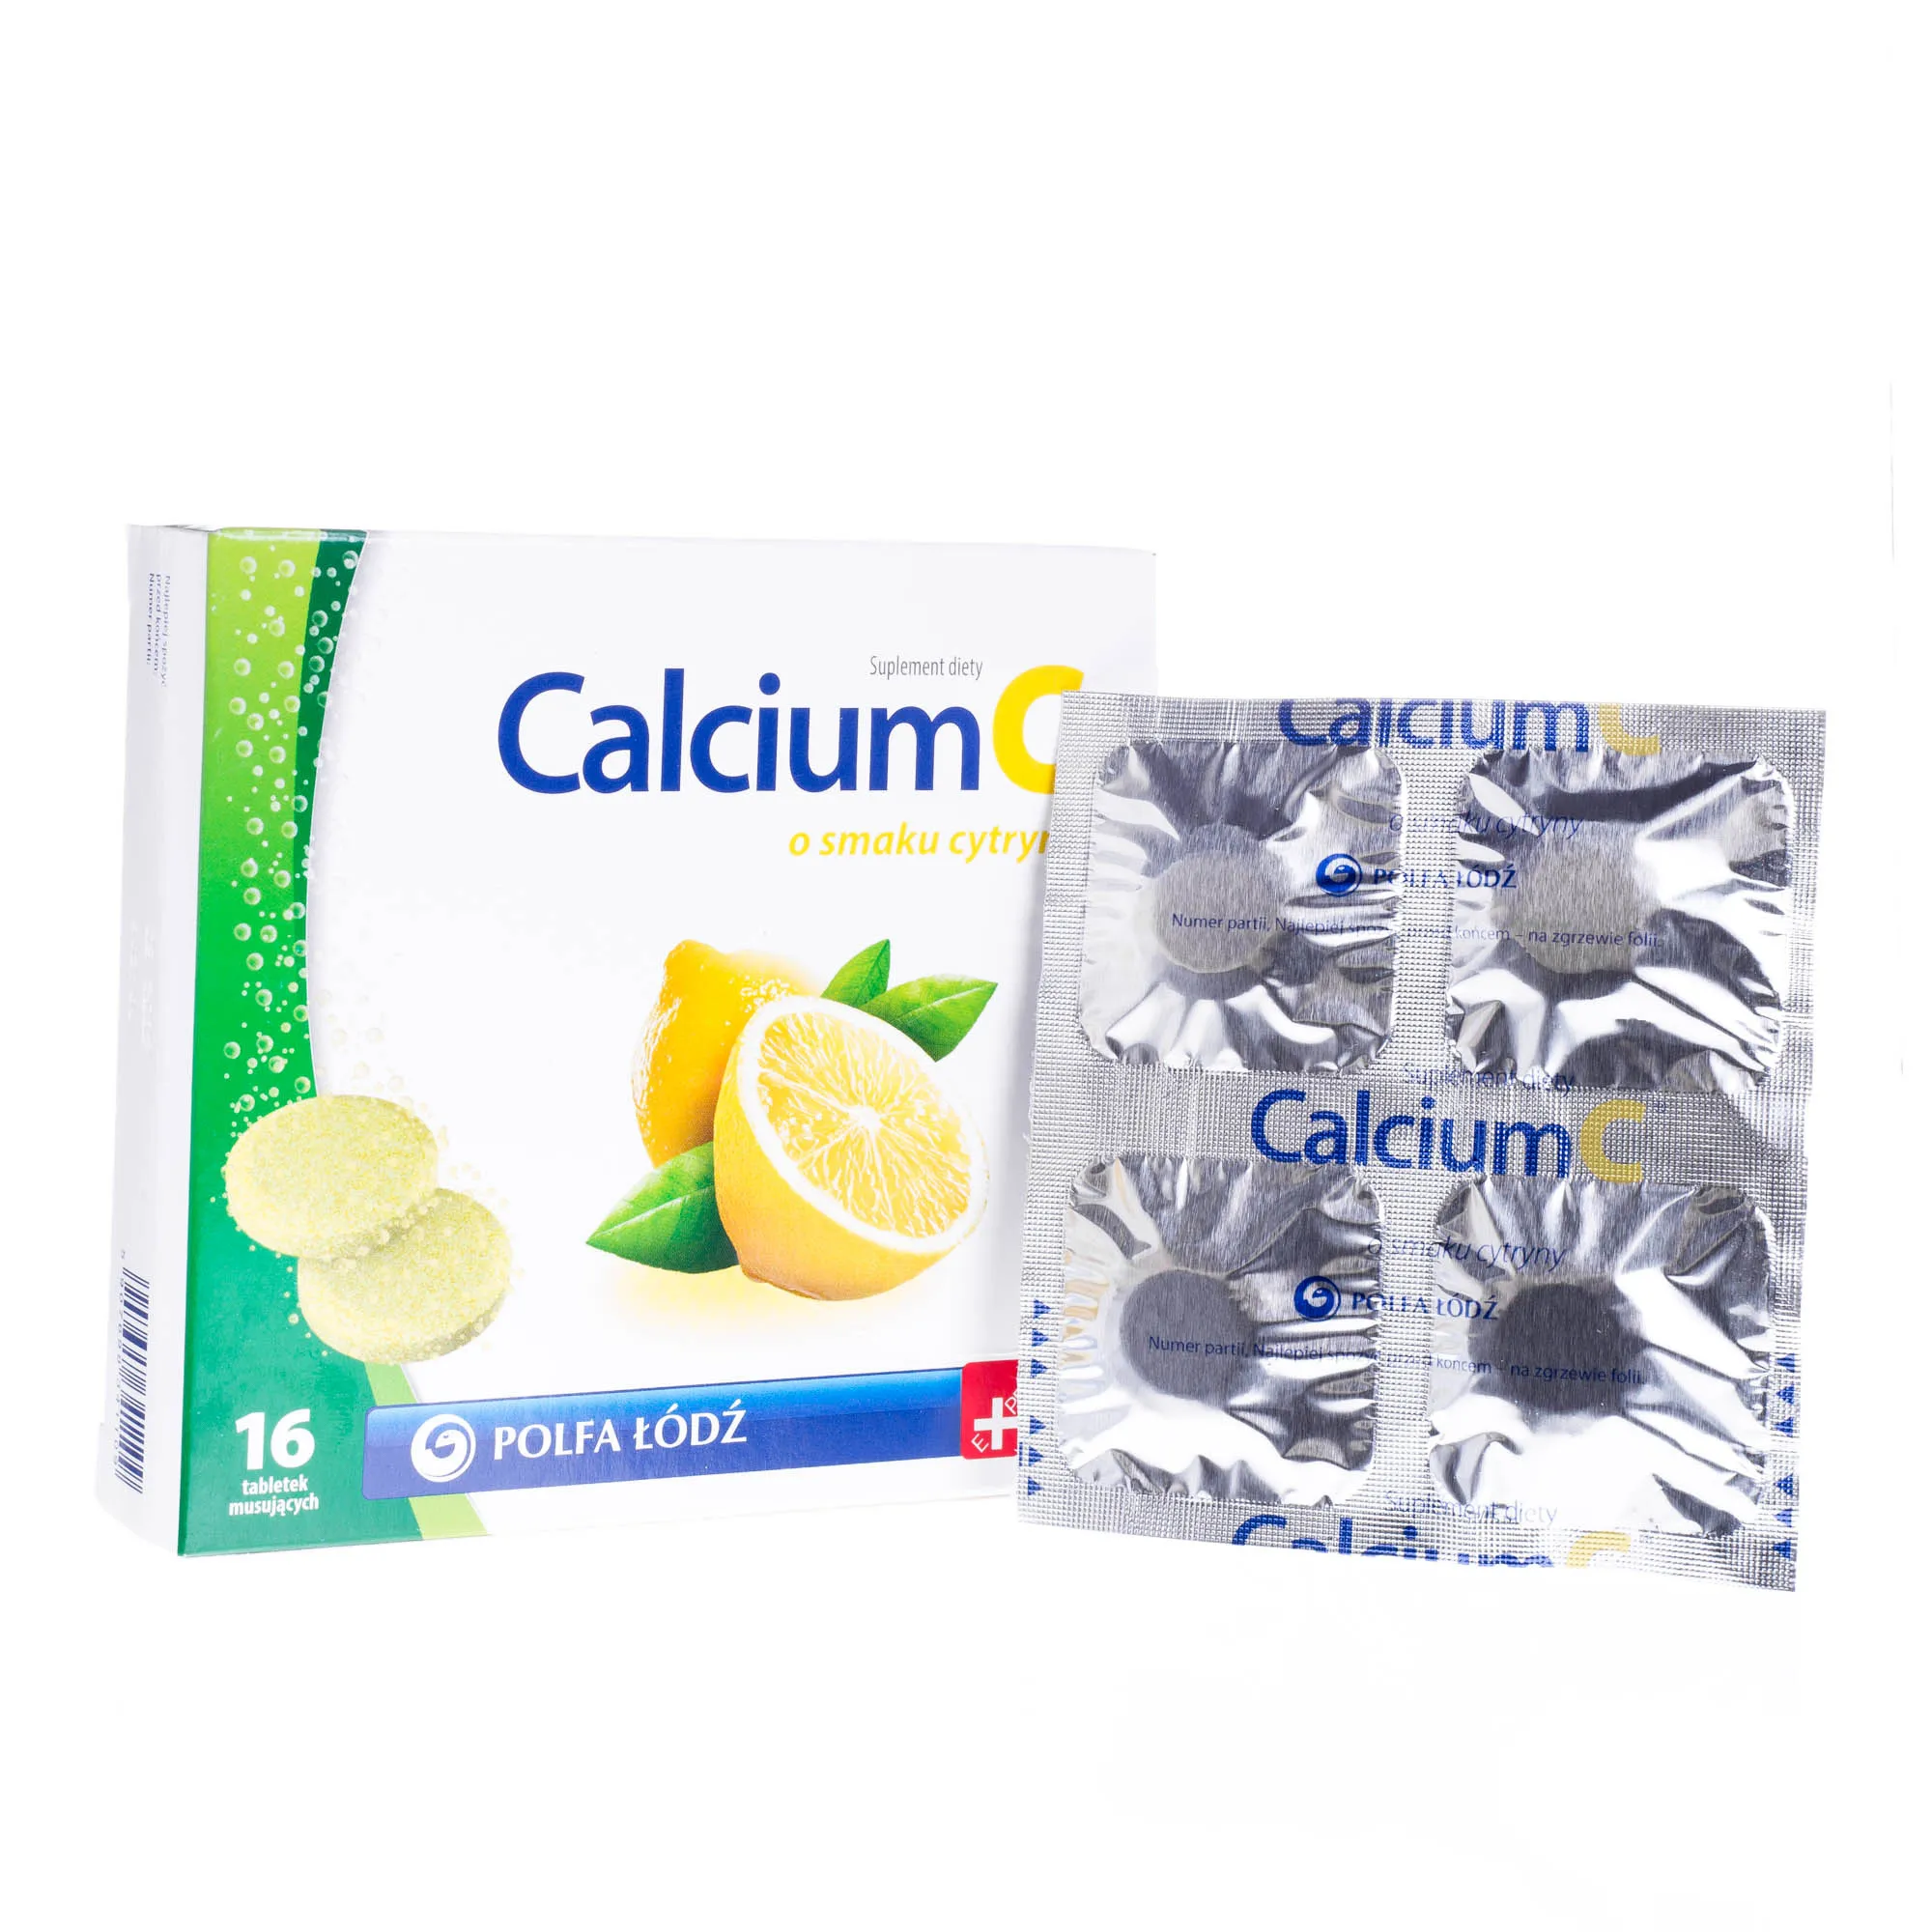 Calcium C o smaku cytryny, suplement diety, 16 tabletek musujących 